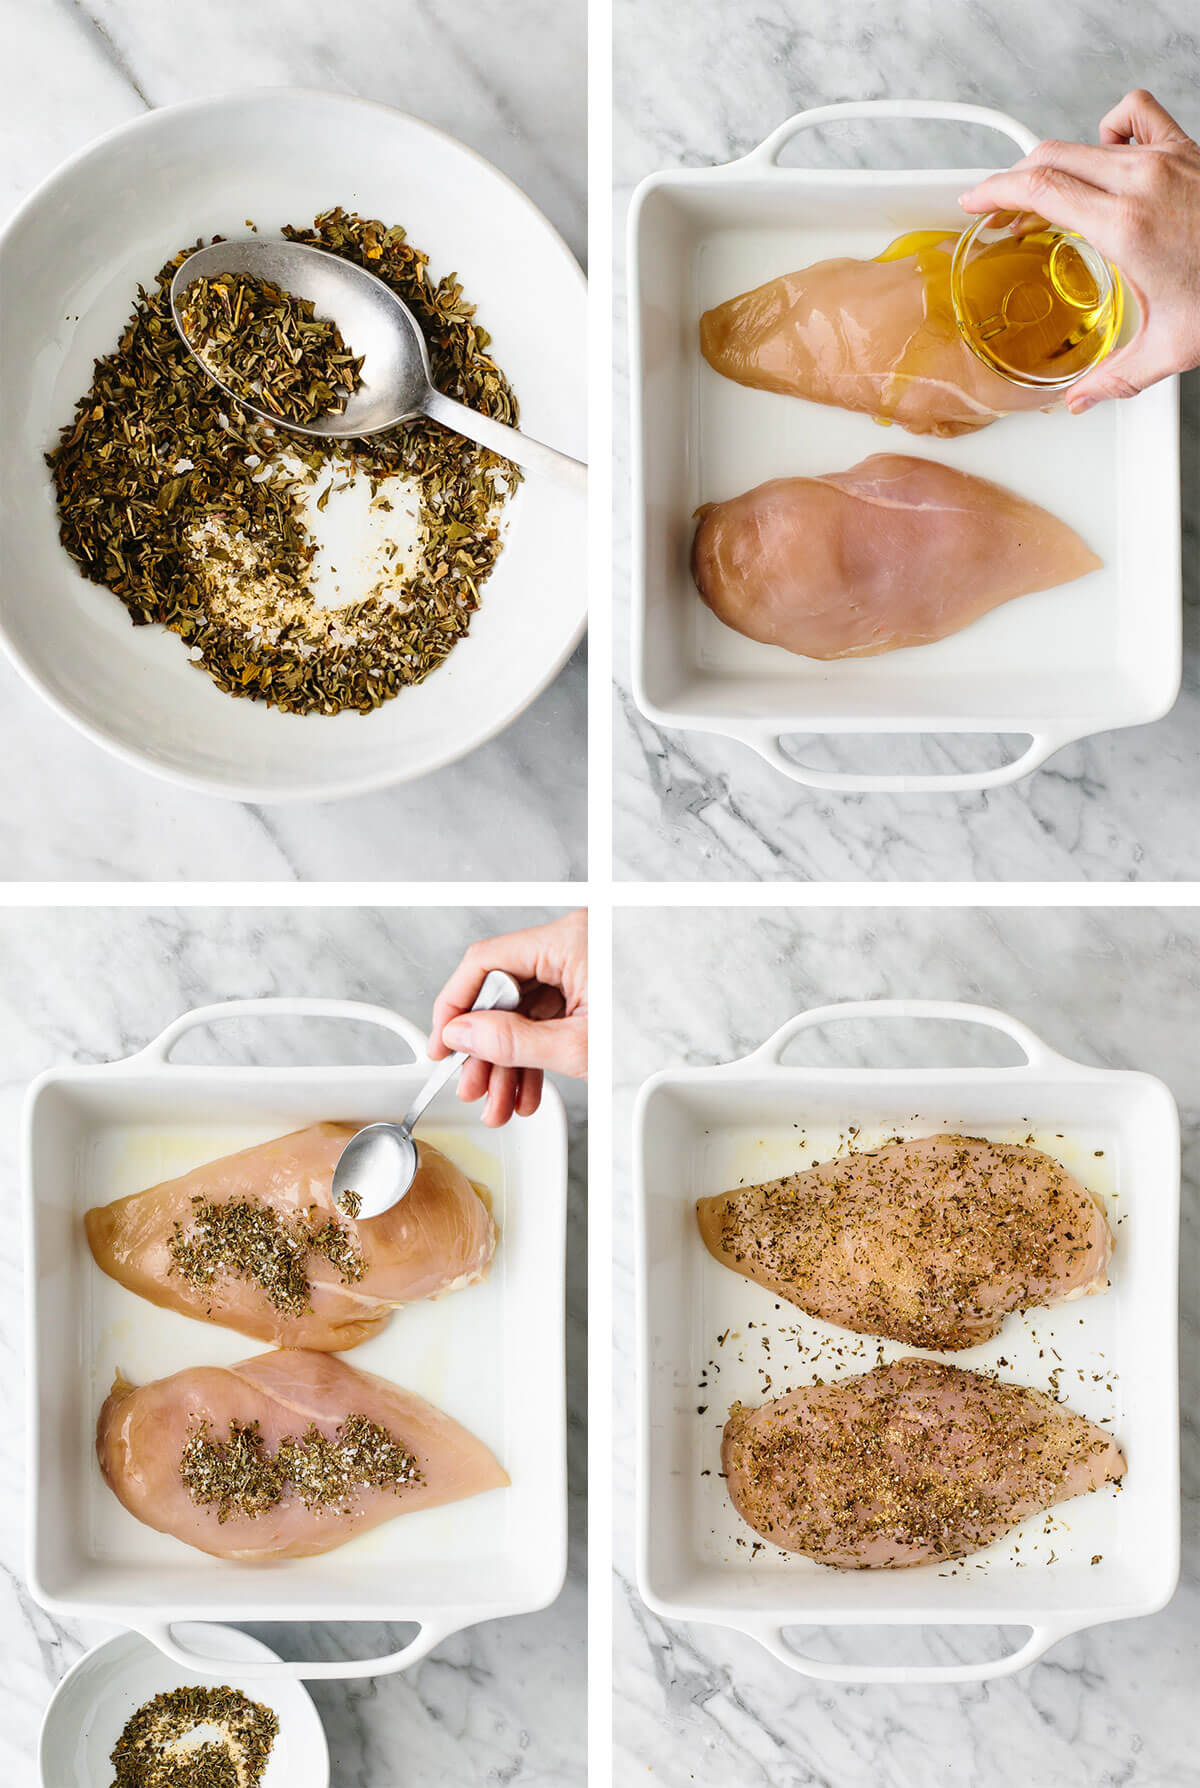 Adding herb seasoning onto herb baked chicken breasts.